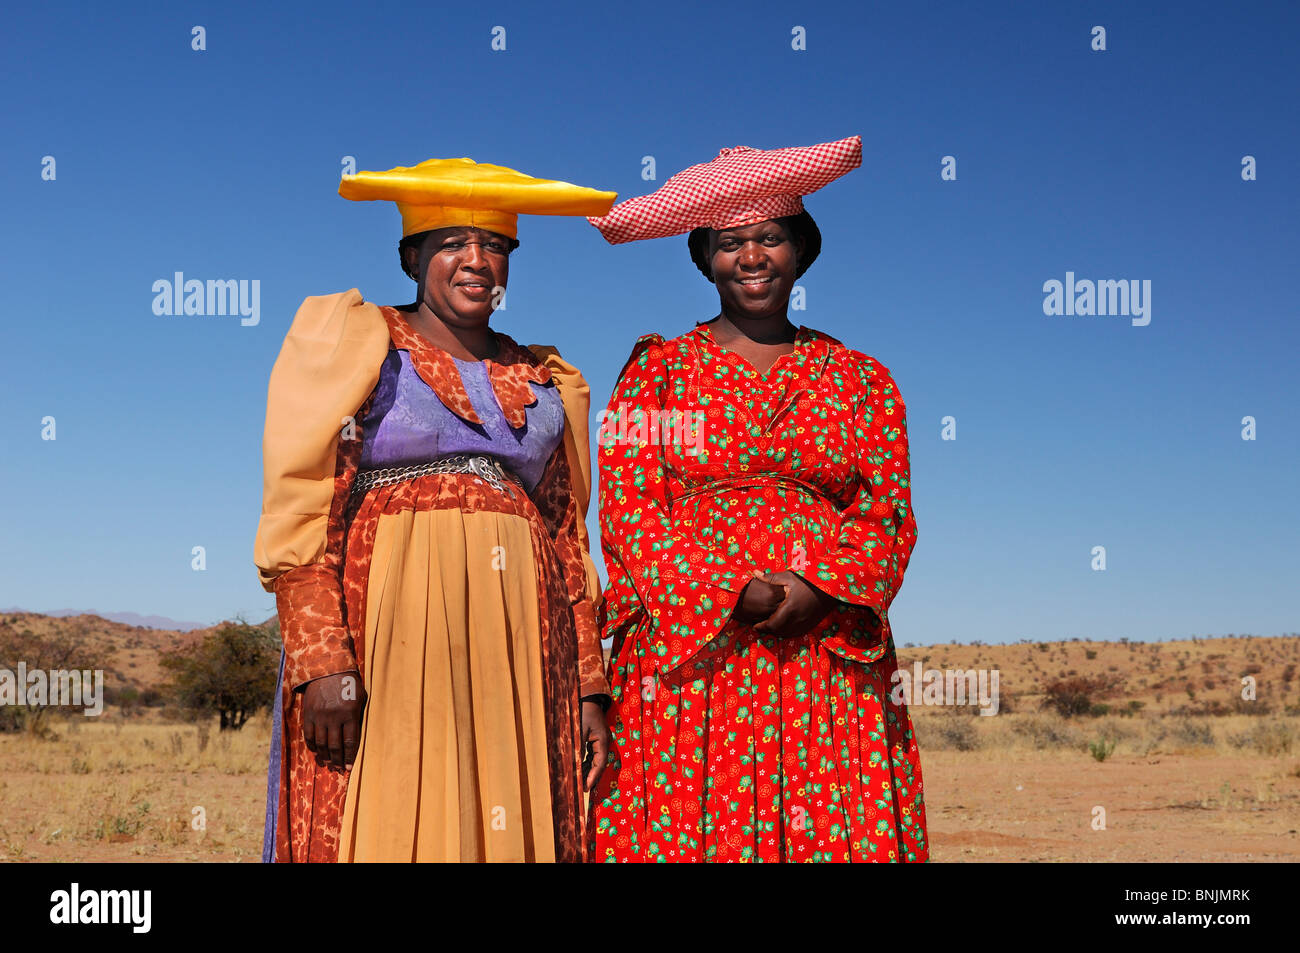 Les femmes Herero Khorixas Damaraland Namibie Région Kunene Afrique Voyage costume traditionnel hat Banque D'Images